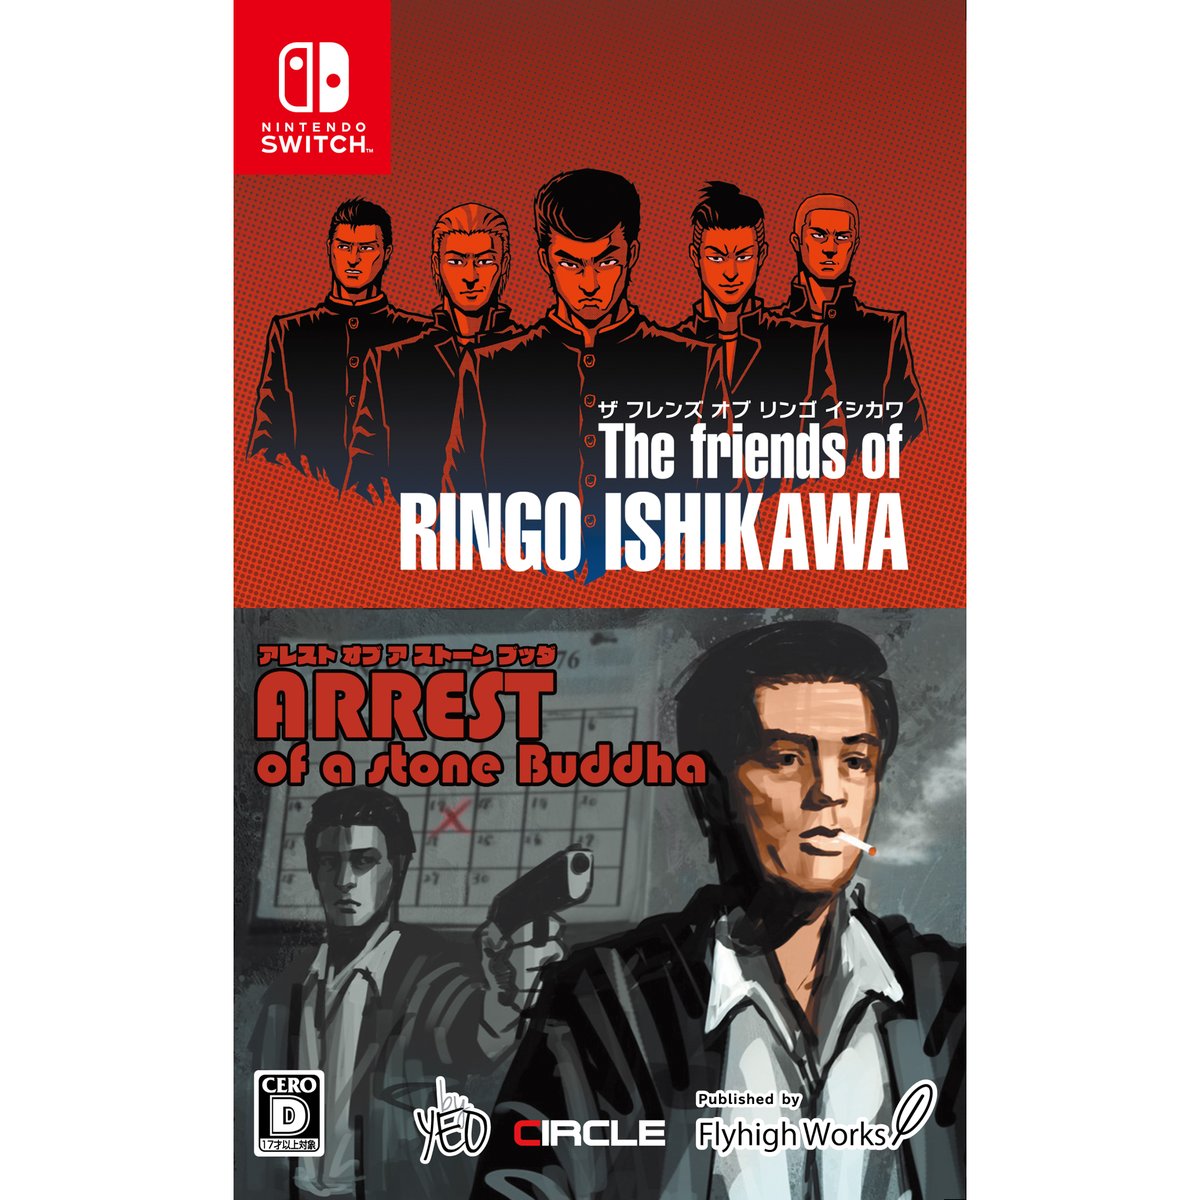 The friends of ringo. Ringo Ishikawa. The friends of Ringo Ishikawa. The friends of Ringo Ishikawa книги. The friends of Ringo Ishikawa магазин.